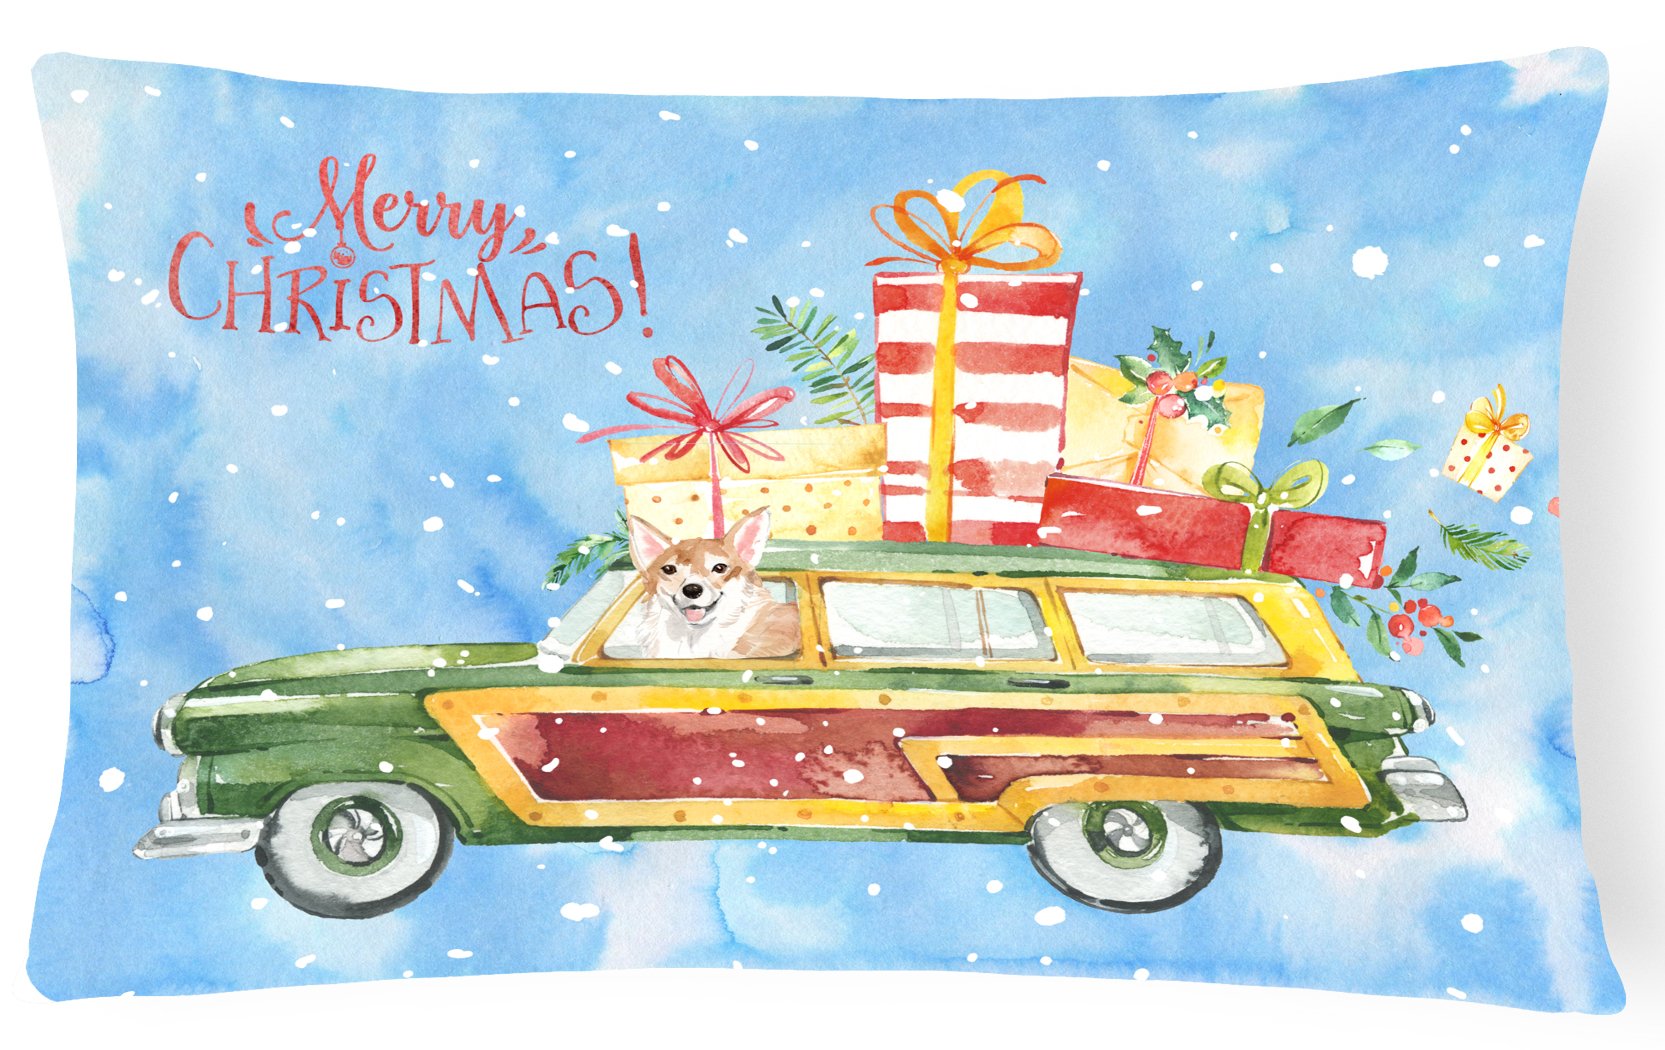 Merry Christmas Corgi Canvas Fabric Decorative Pillow CK2451PW1216 by Caroline's Treasures